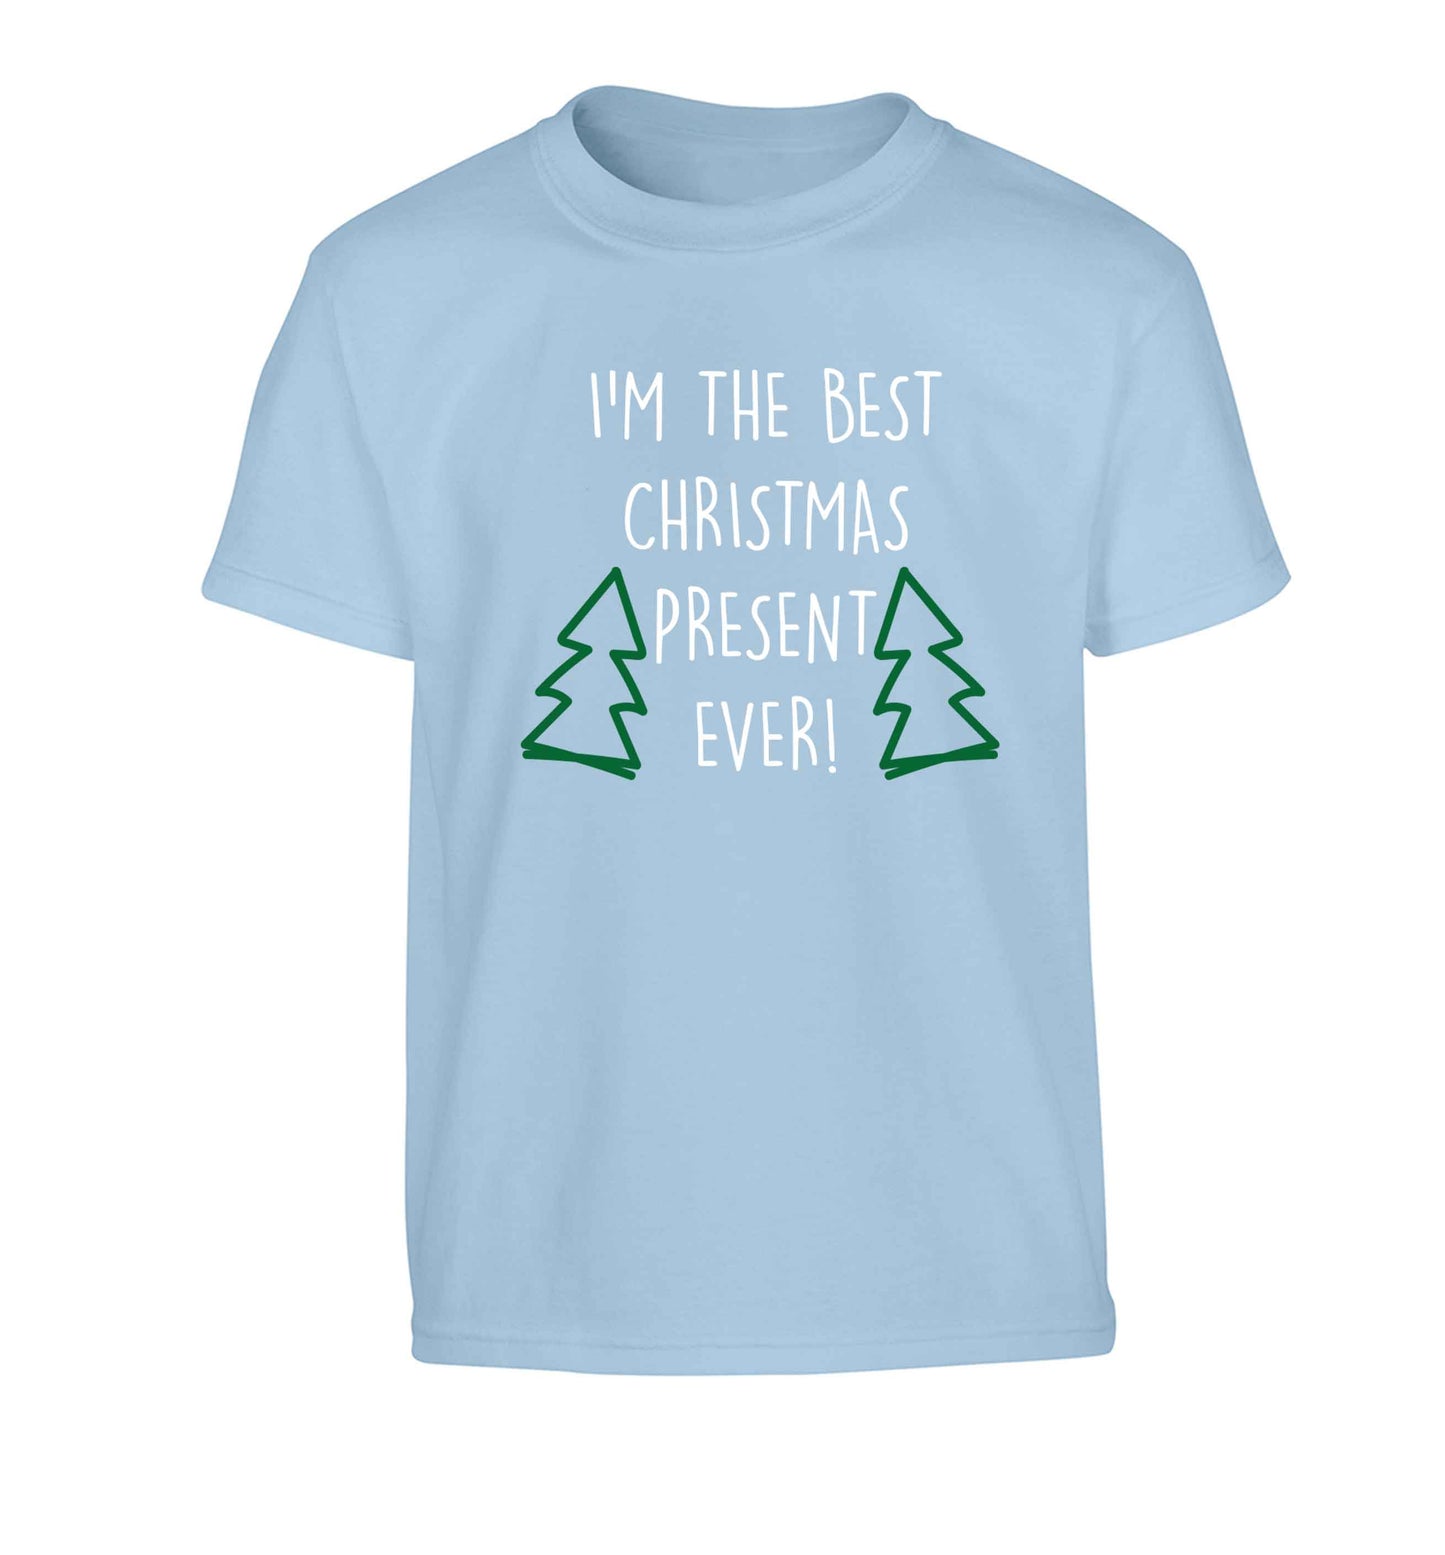 I'm the best Christmas present ever Children's light blue Tshirt 12-13 Years